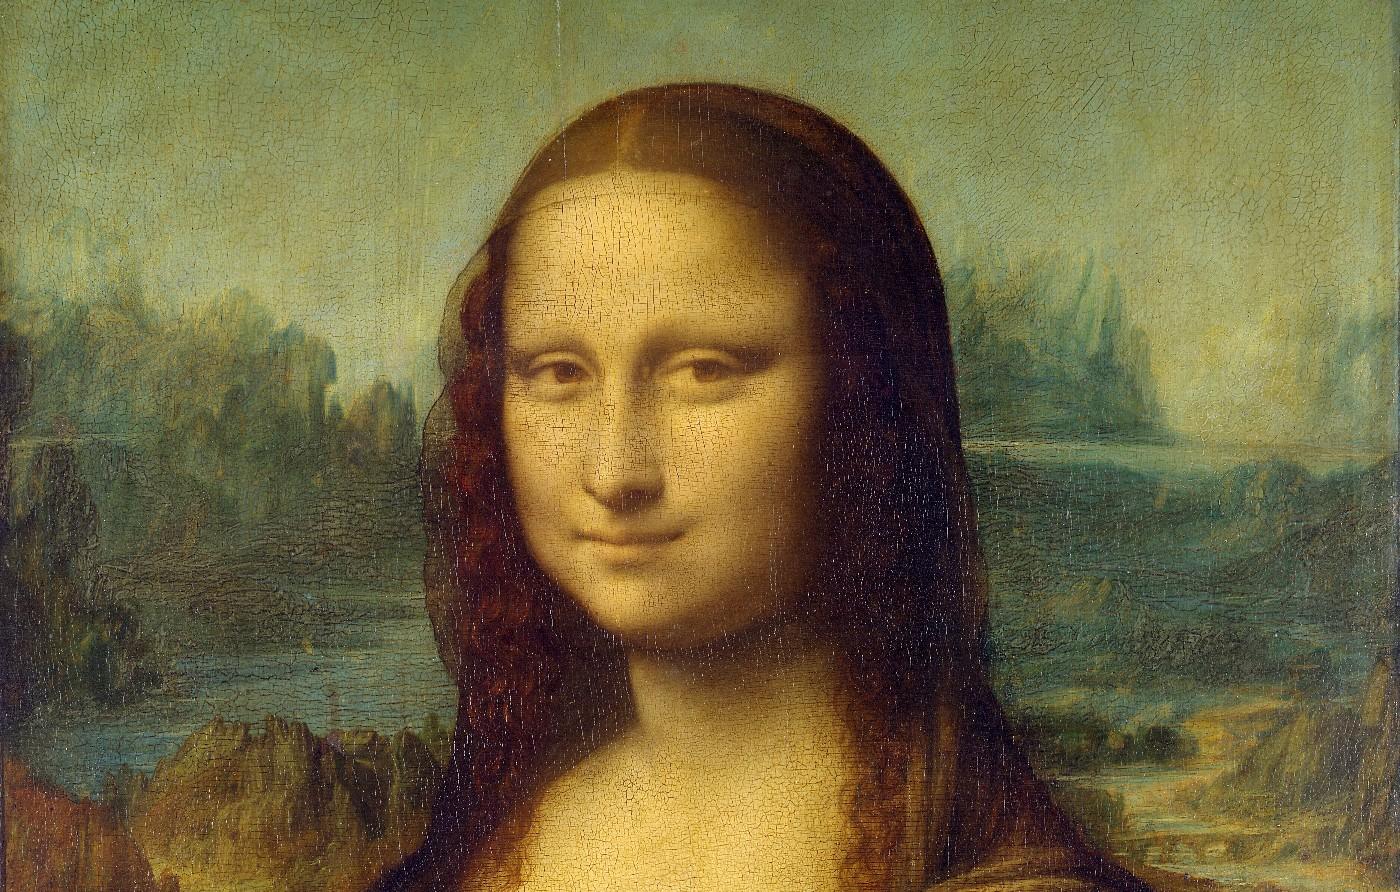 Mona Lisa misc poses : r/oeh123